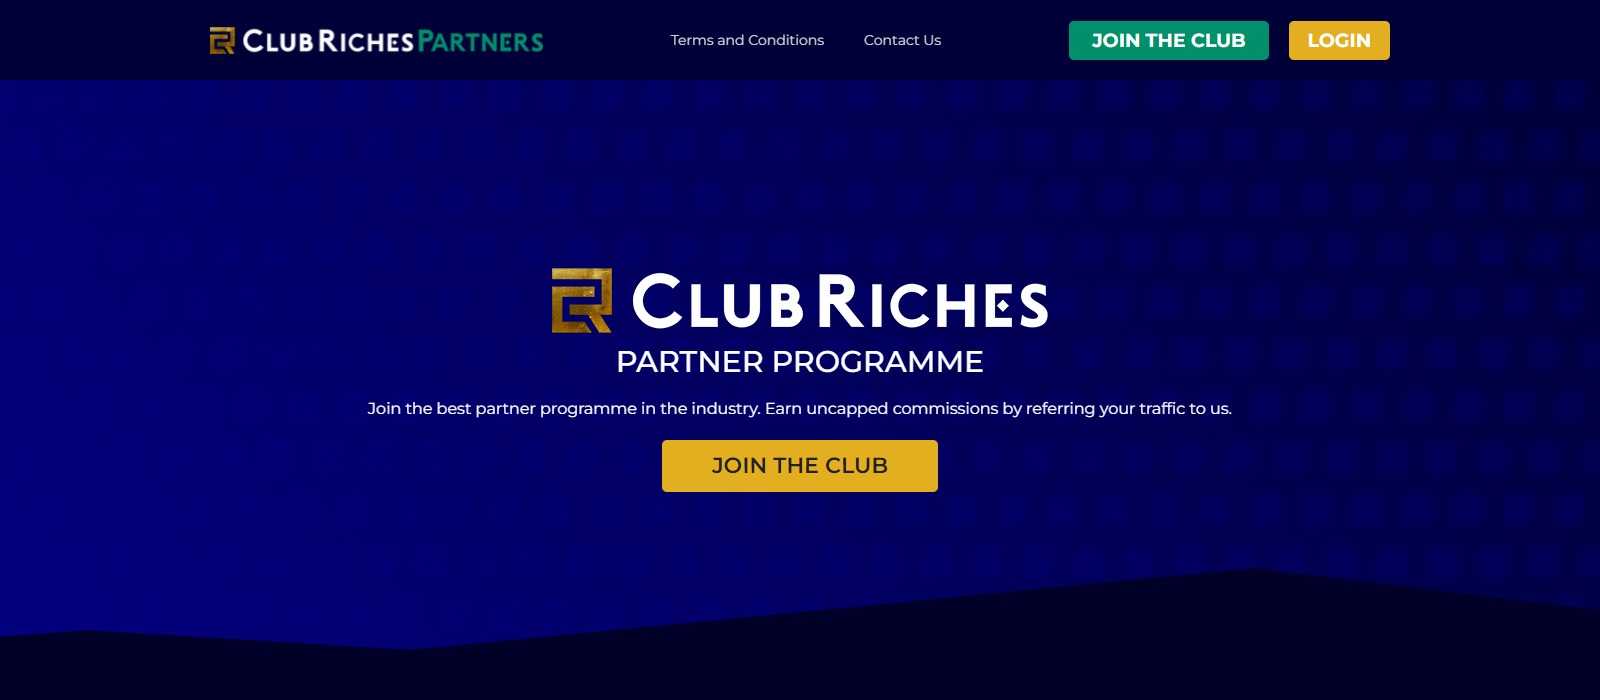 Club Riches Partners Affiliates Program Review: 30% - 45% Recurring revenue Share